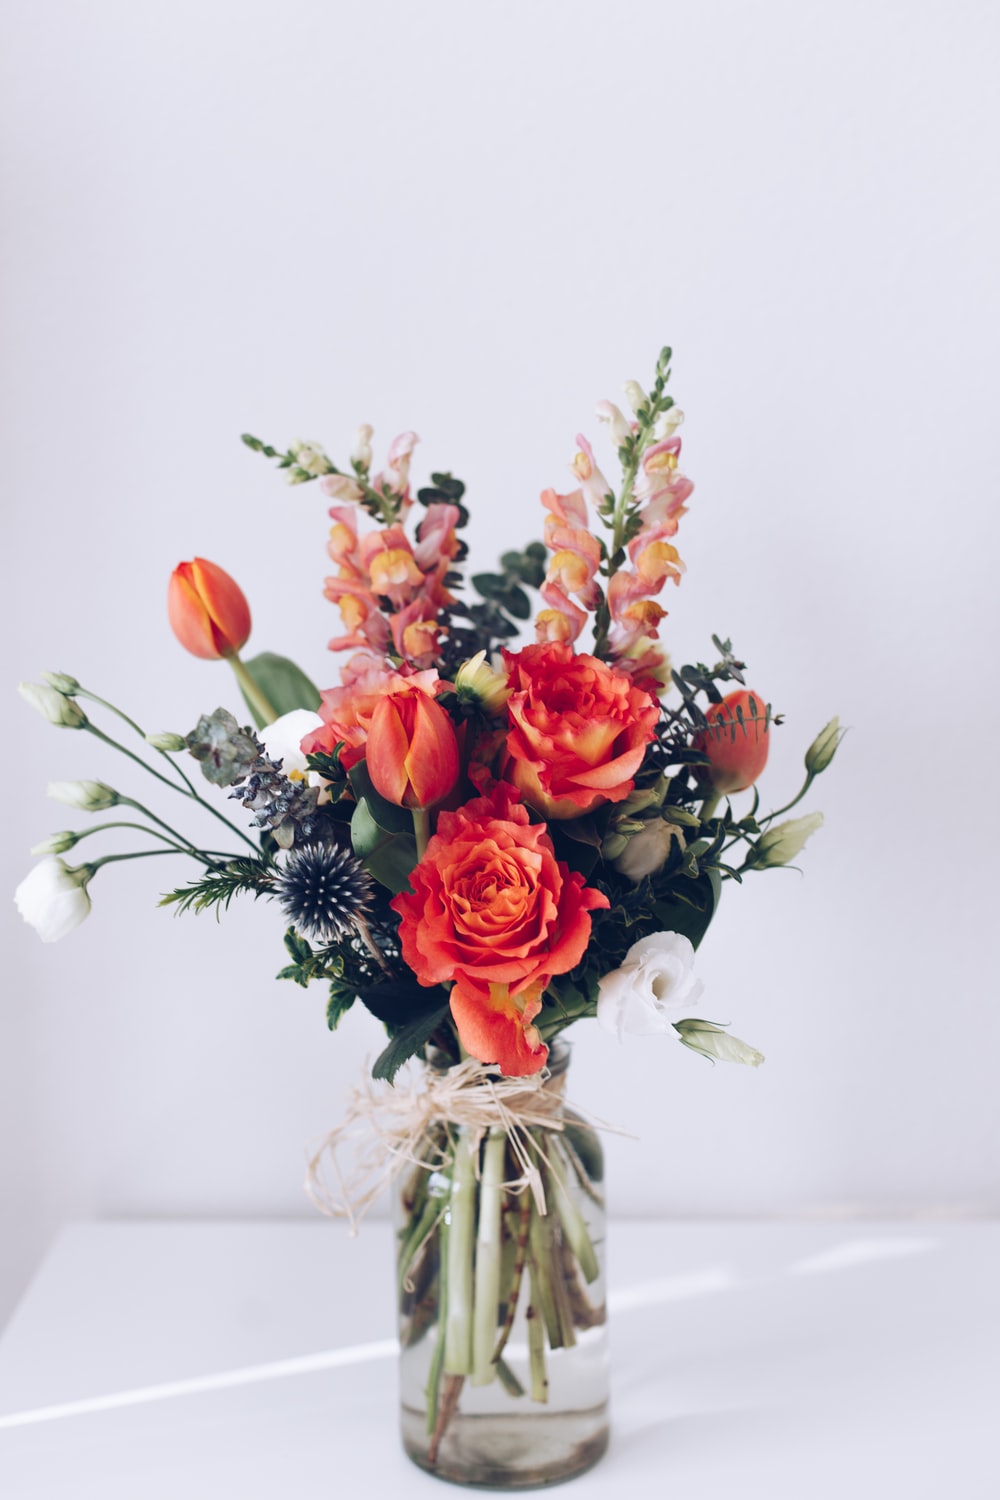 Floral Arrangement Picture. Download Free Image